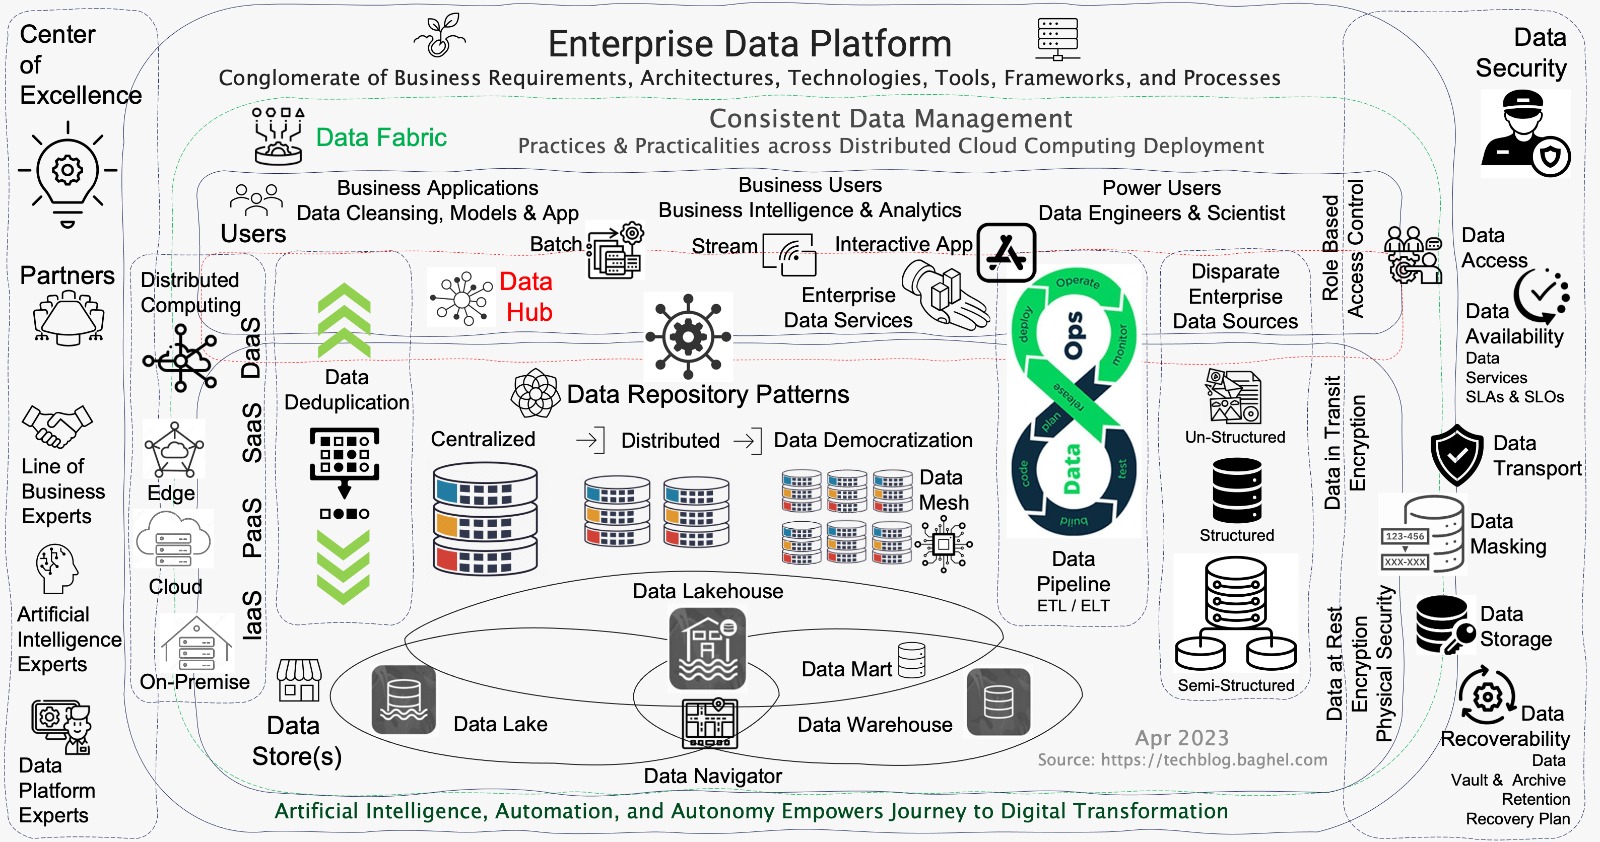 Reference Architecture: Enterprise Data Platform